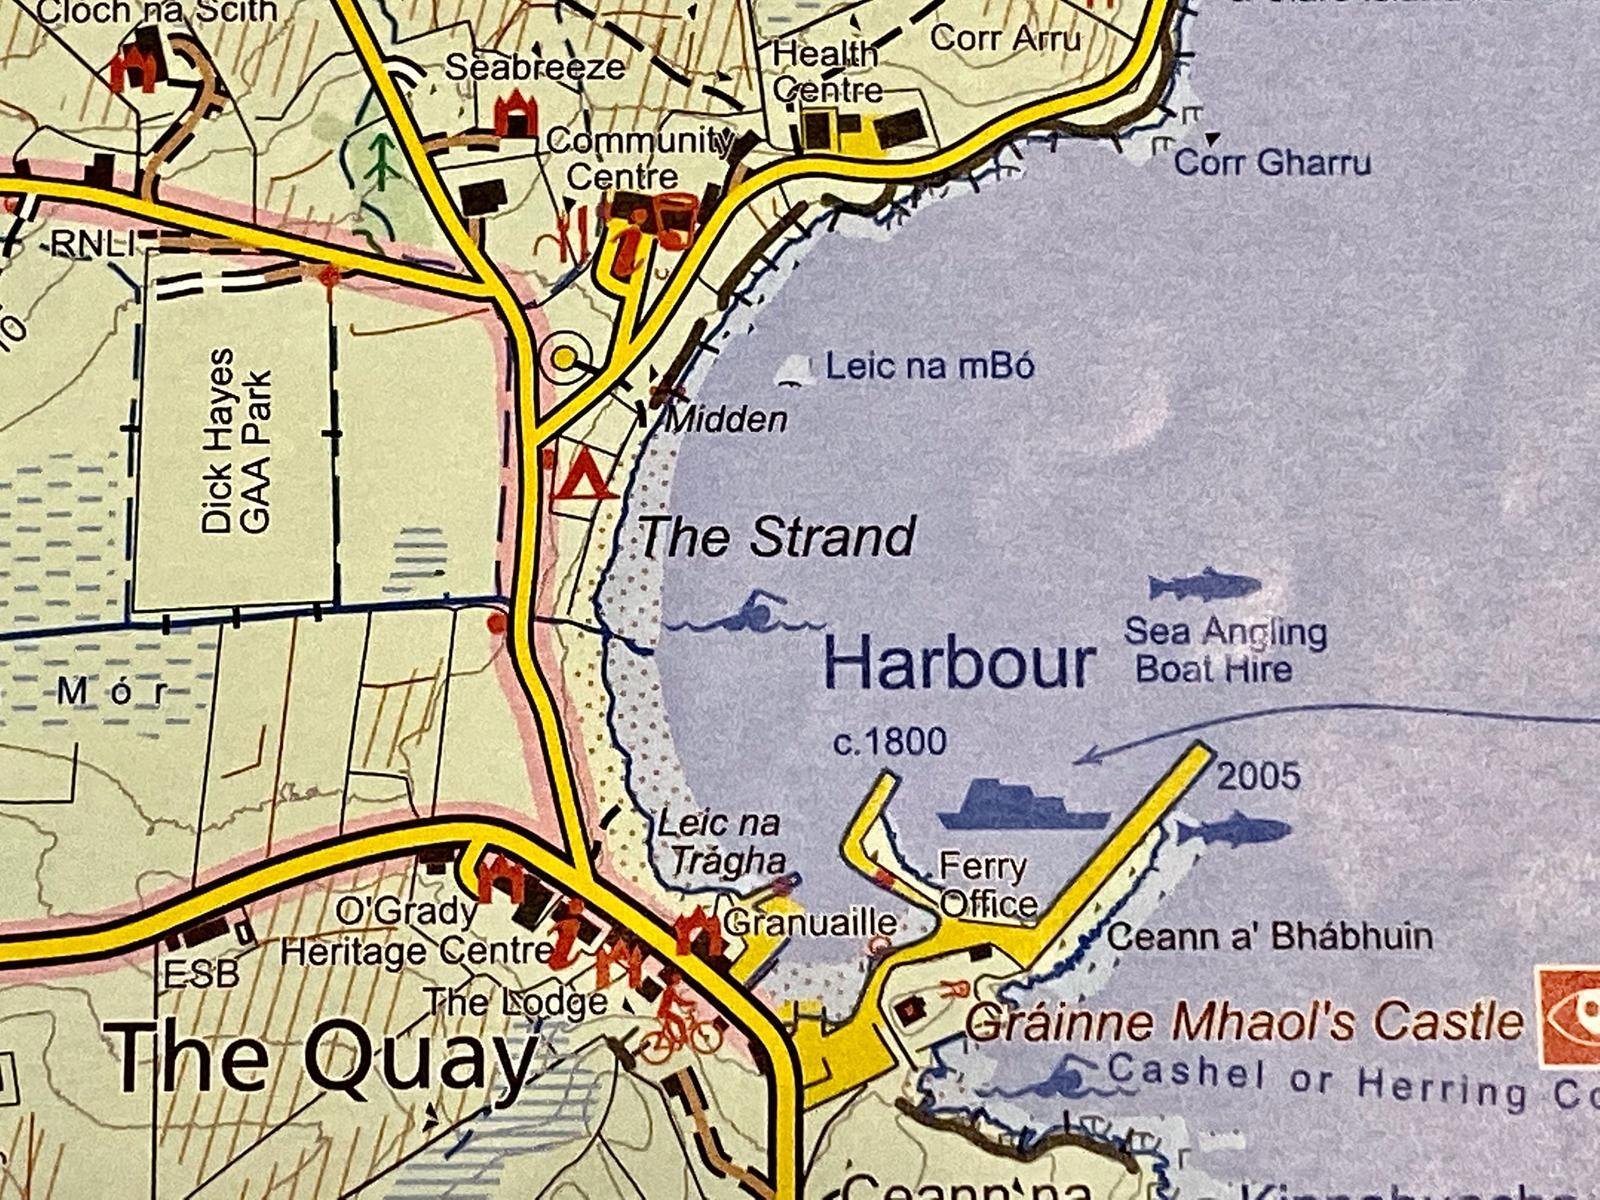 Image - The Quay, Clare Island